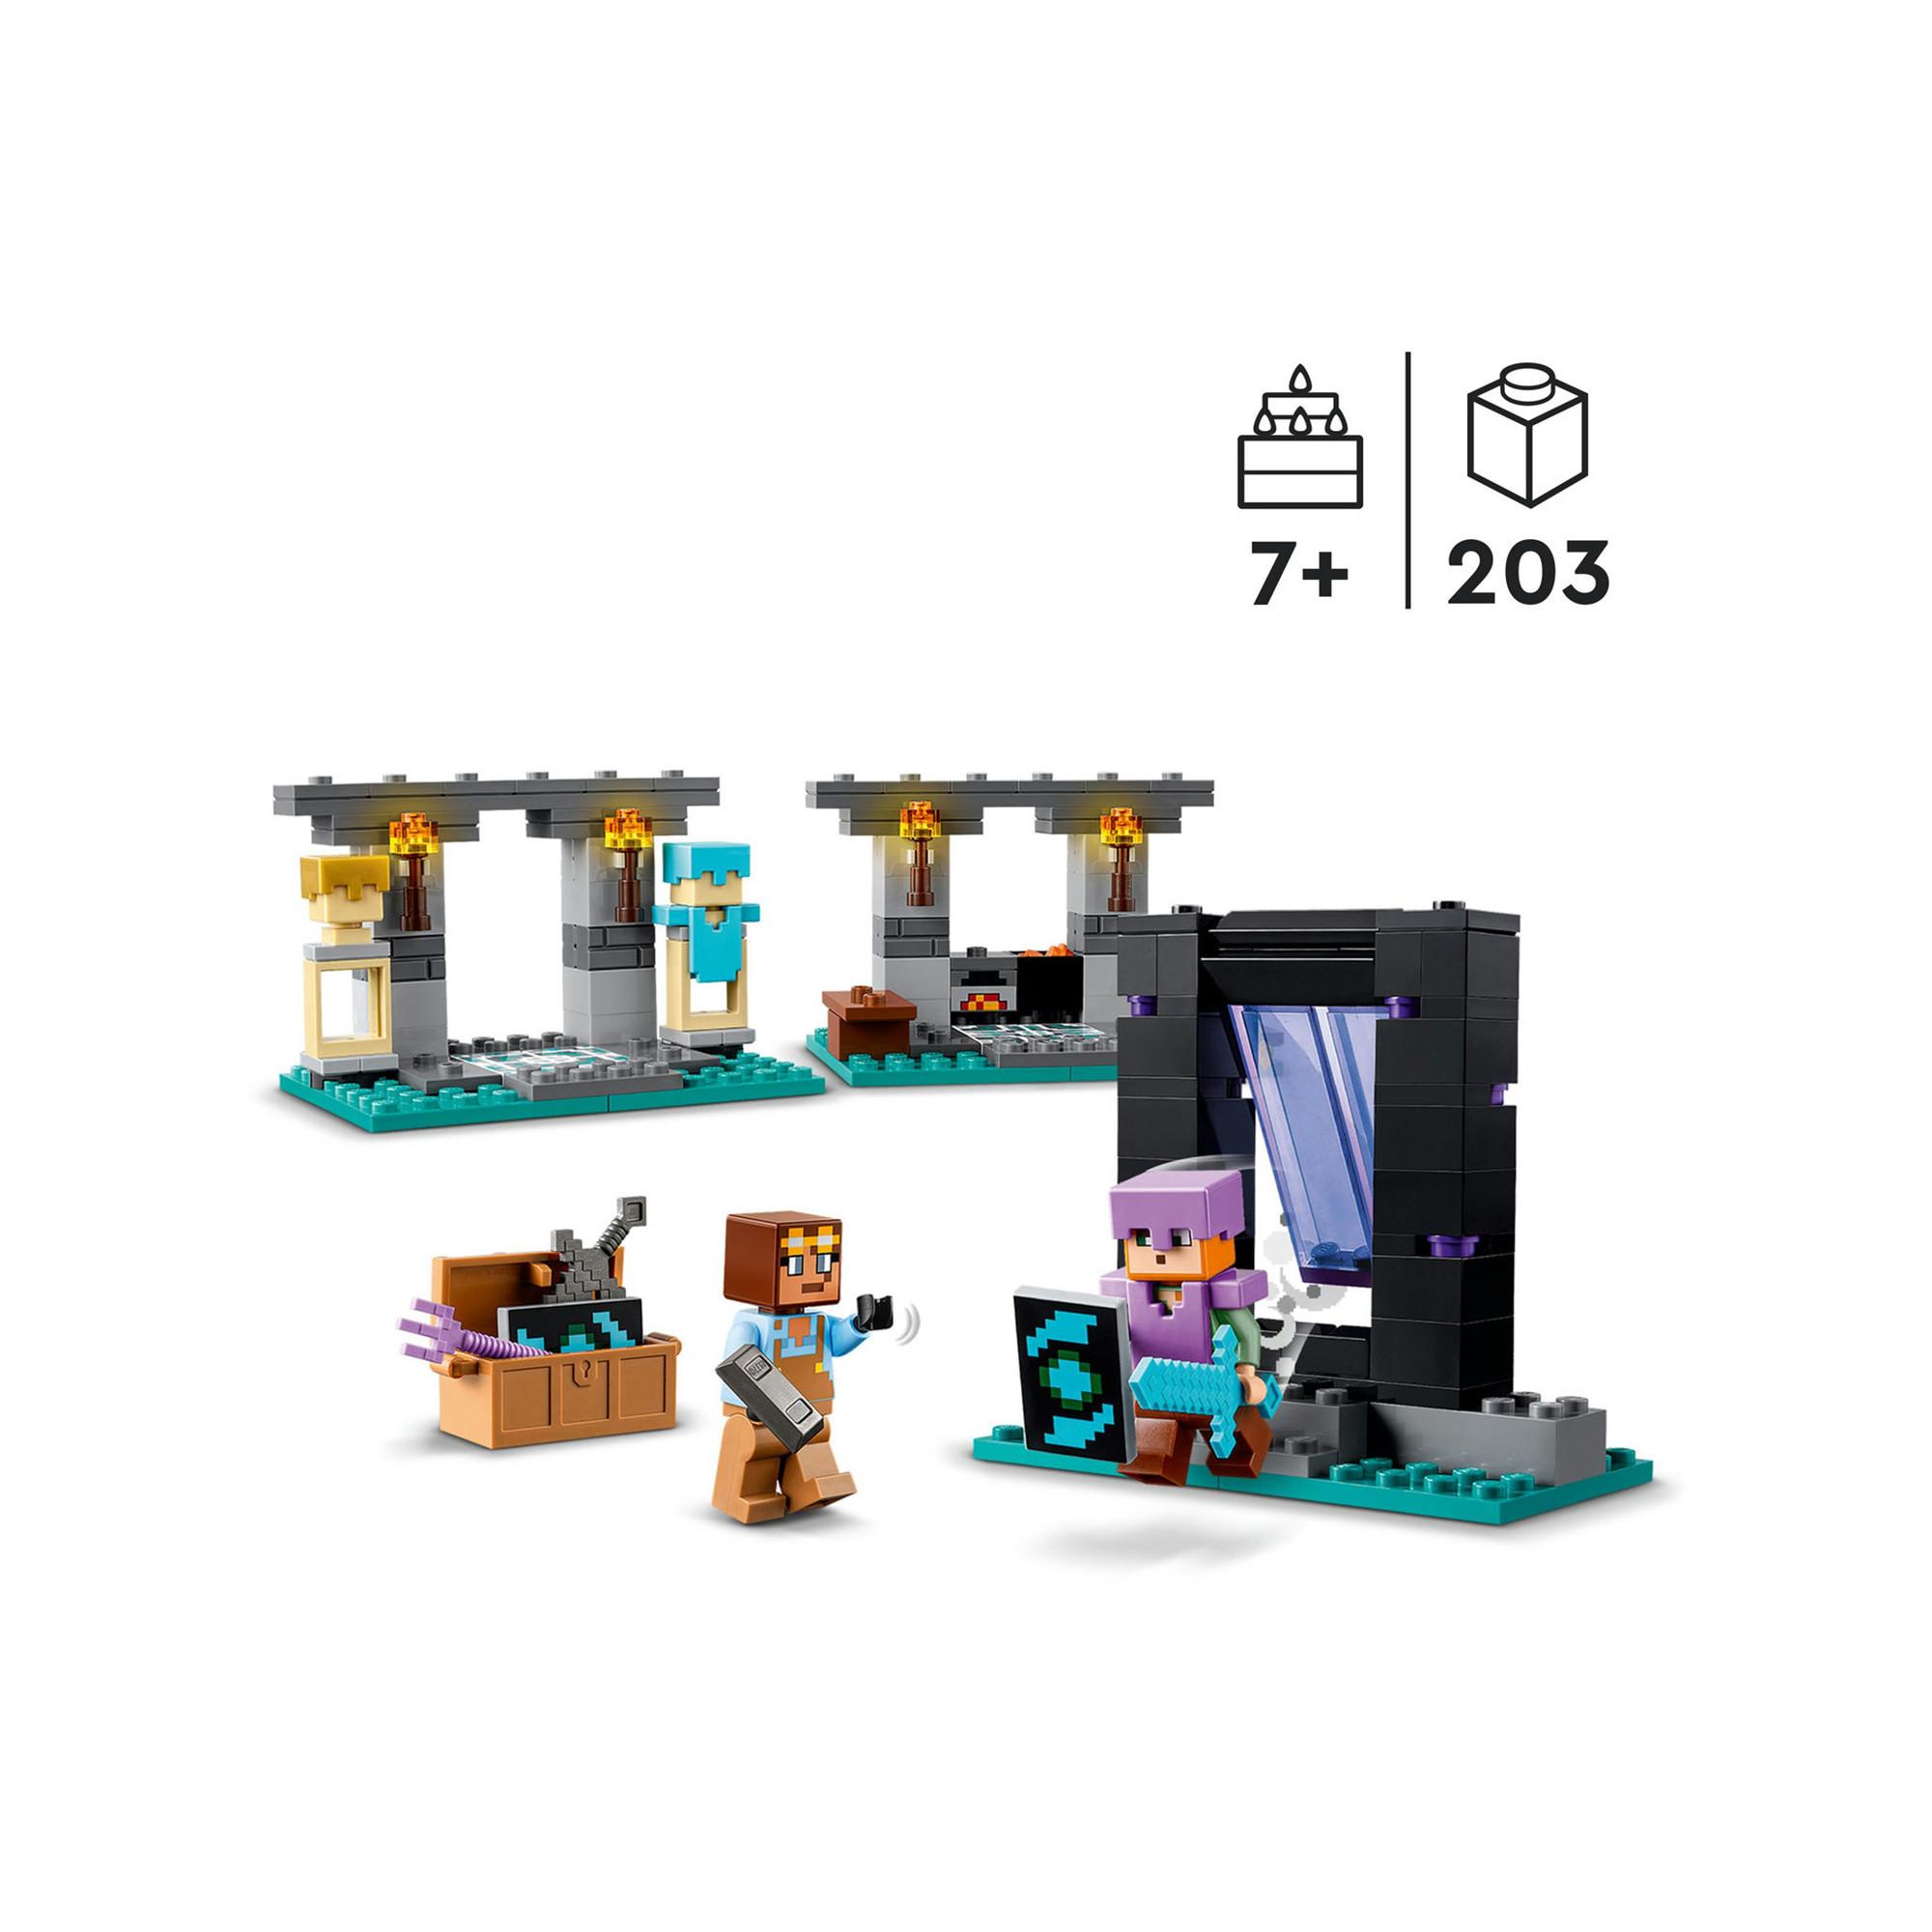 LEGO®  21252 L’armurerie 